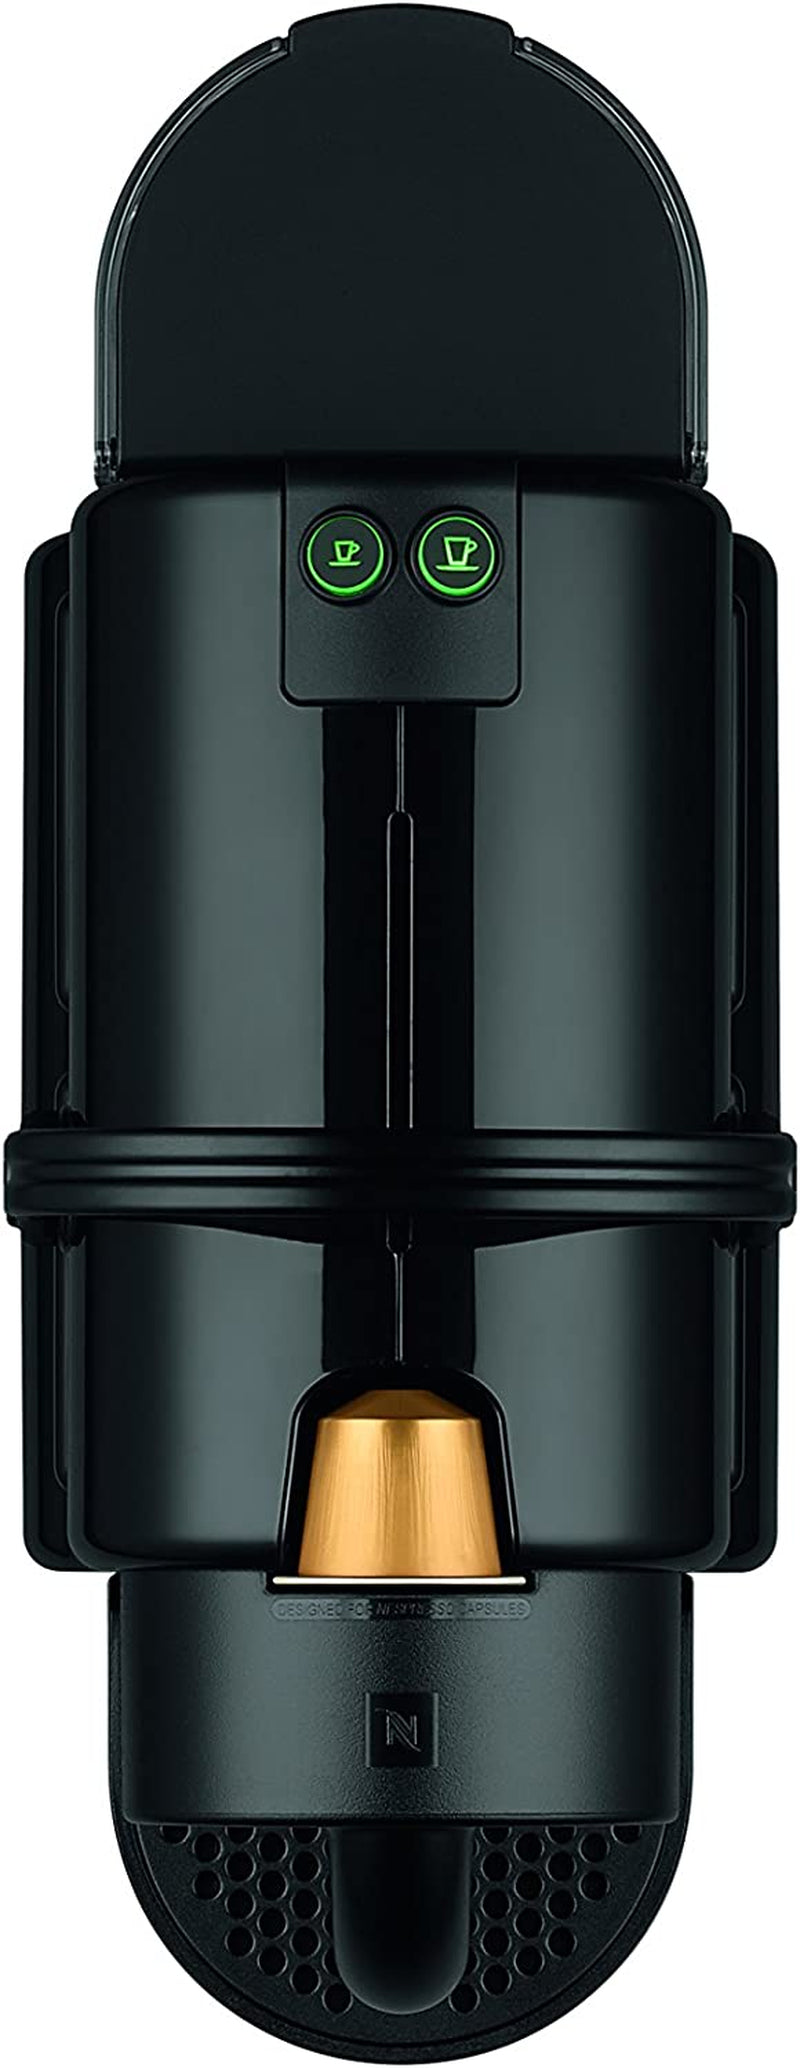 EN80B Original Espresso Machine by De'Longhi, 12.6 X 4.7 X 9 Inches, Black